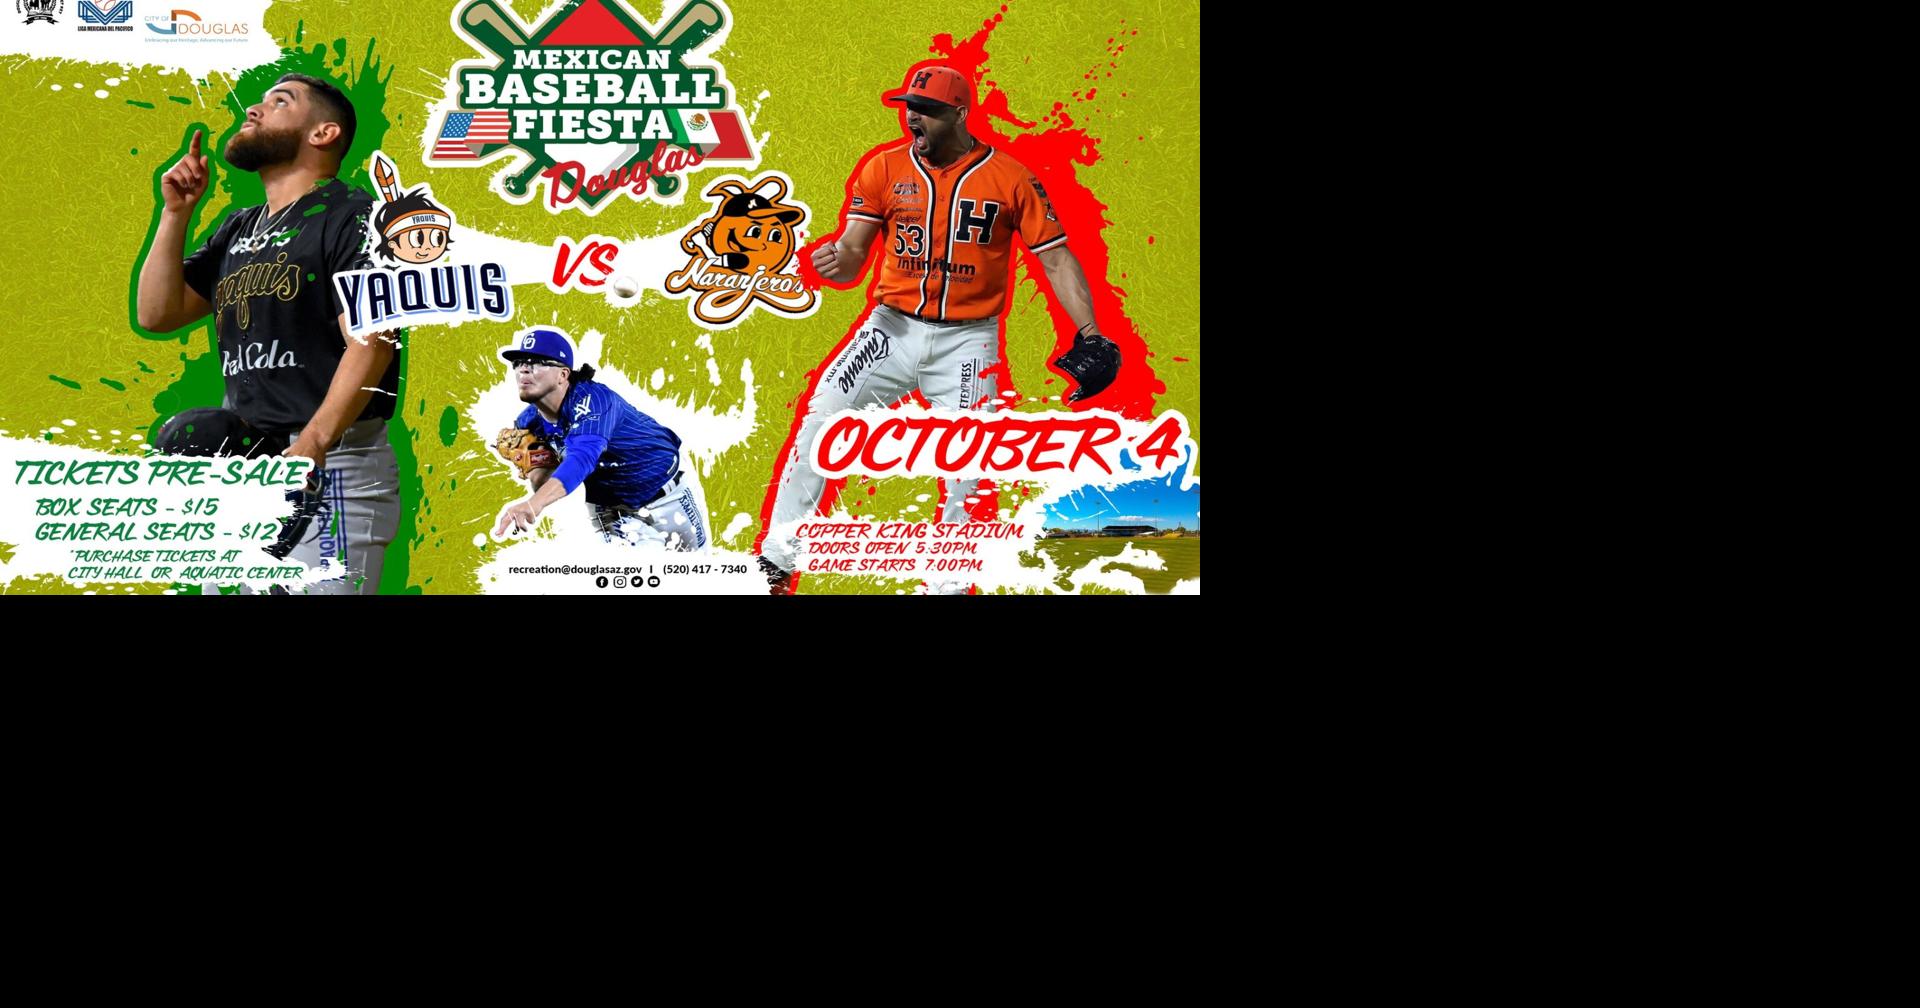 Tickets on sale for Mexican Baseball Fiesta in Douglas